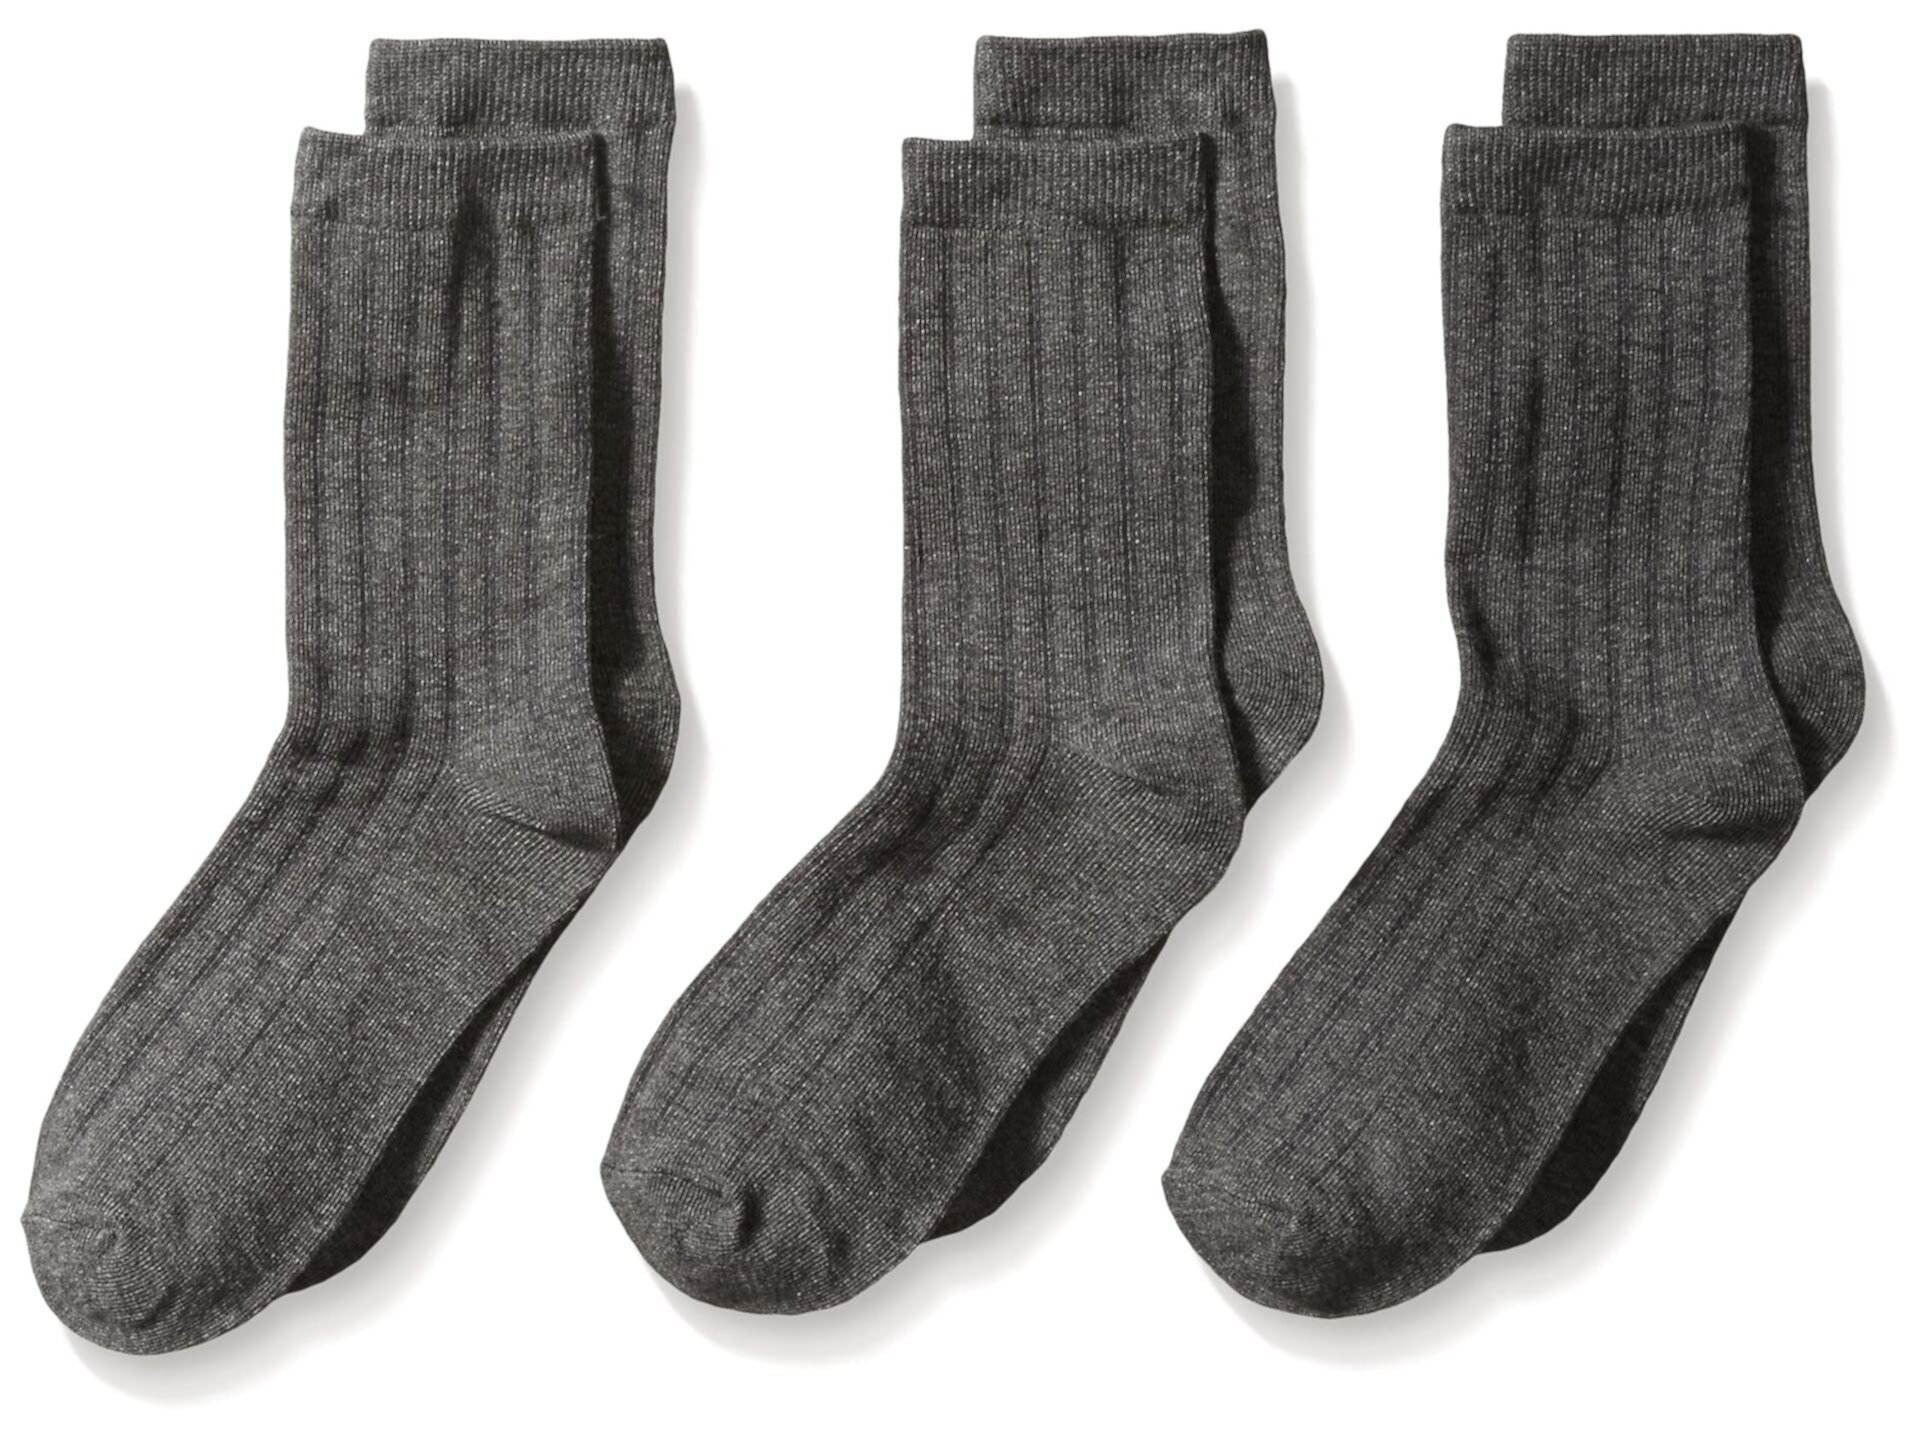 Три на носочки. Носки в рубчик. Носки трикотажные в рубчик. Набор из трех носков. Три носка в комплекте.